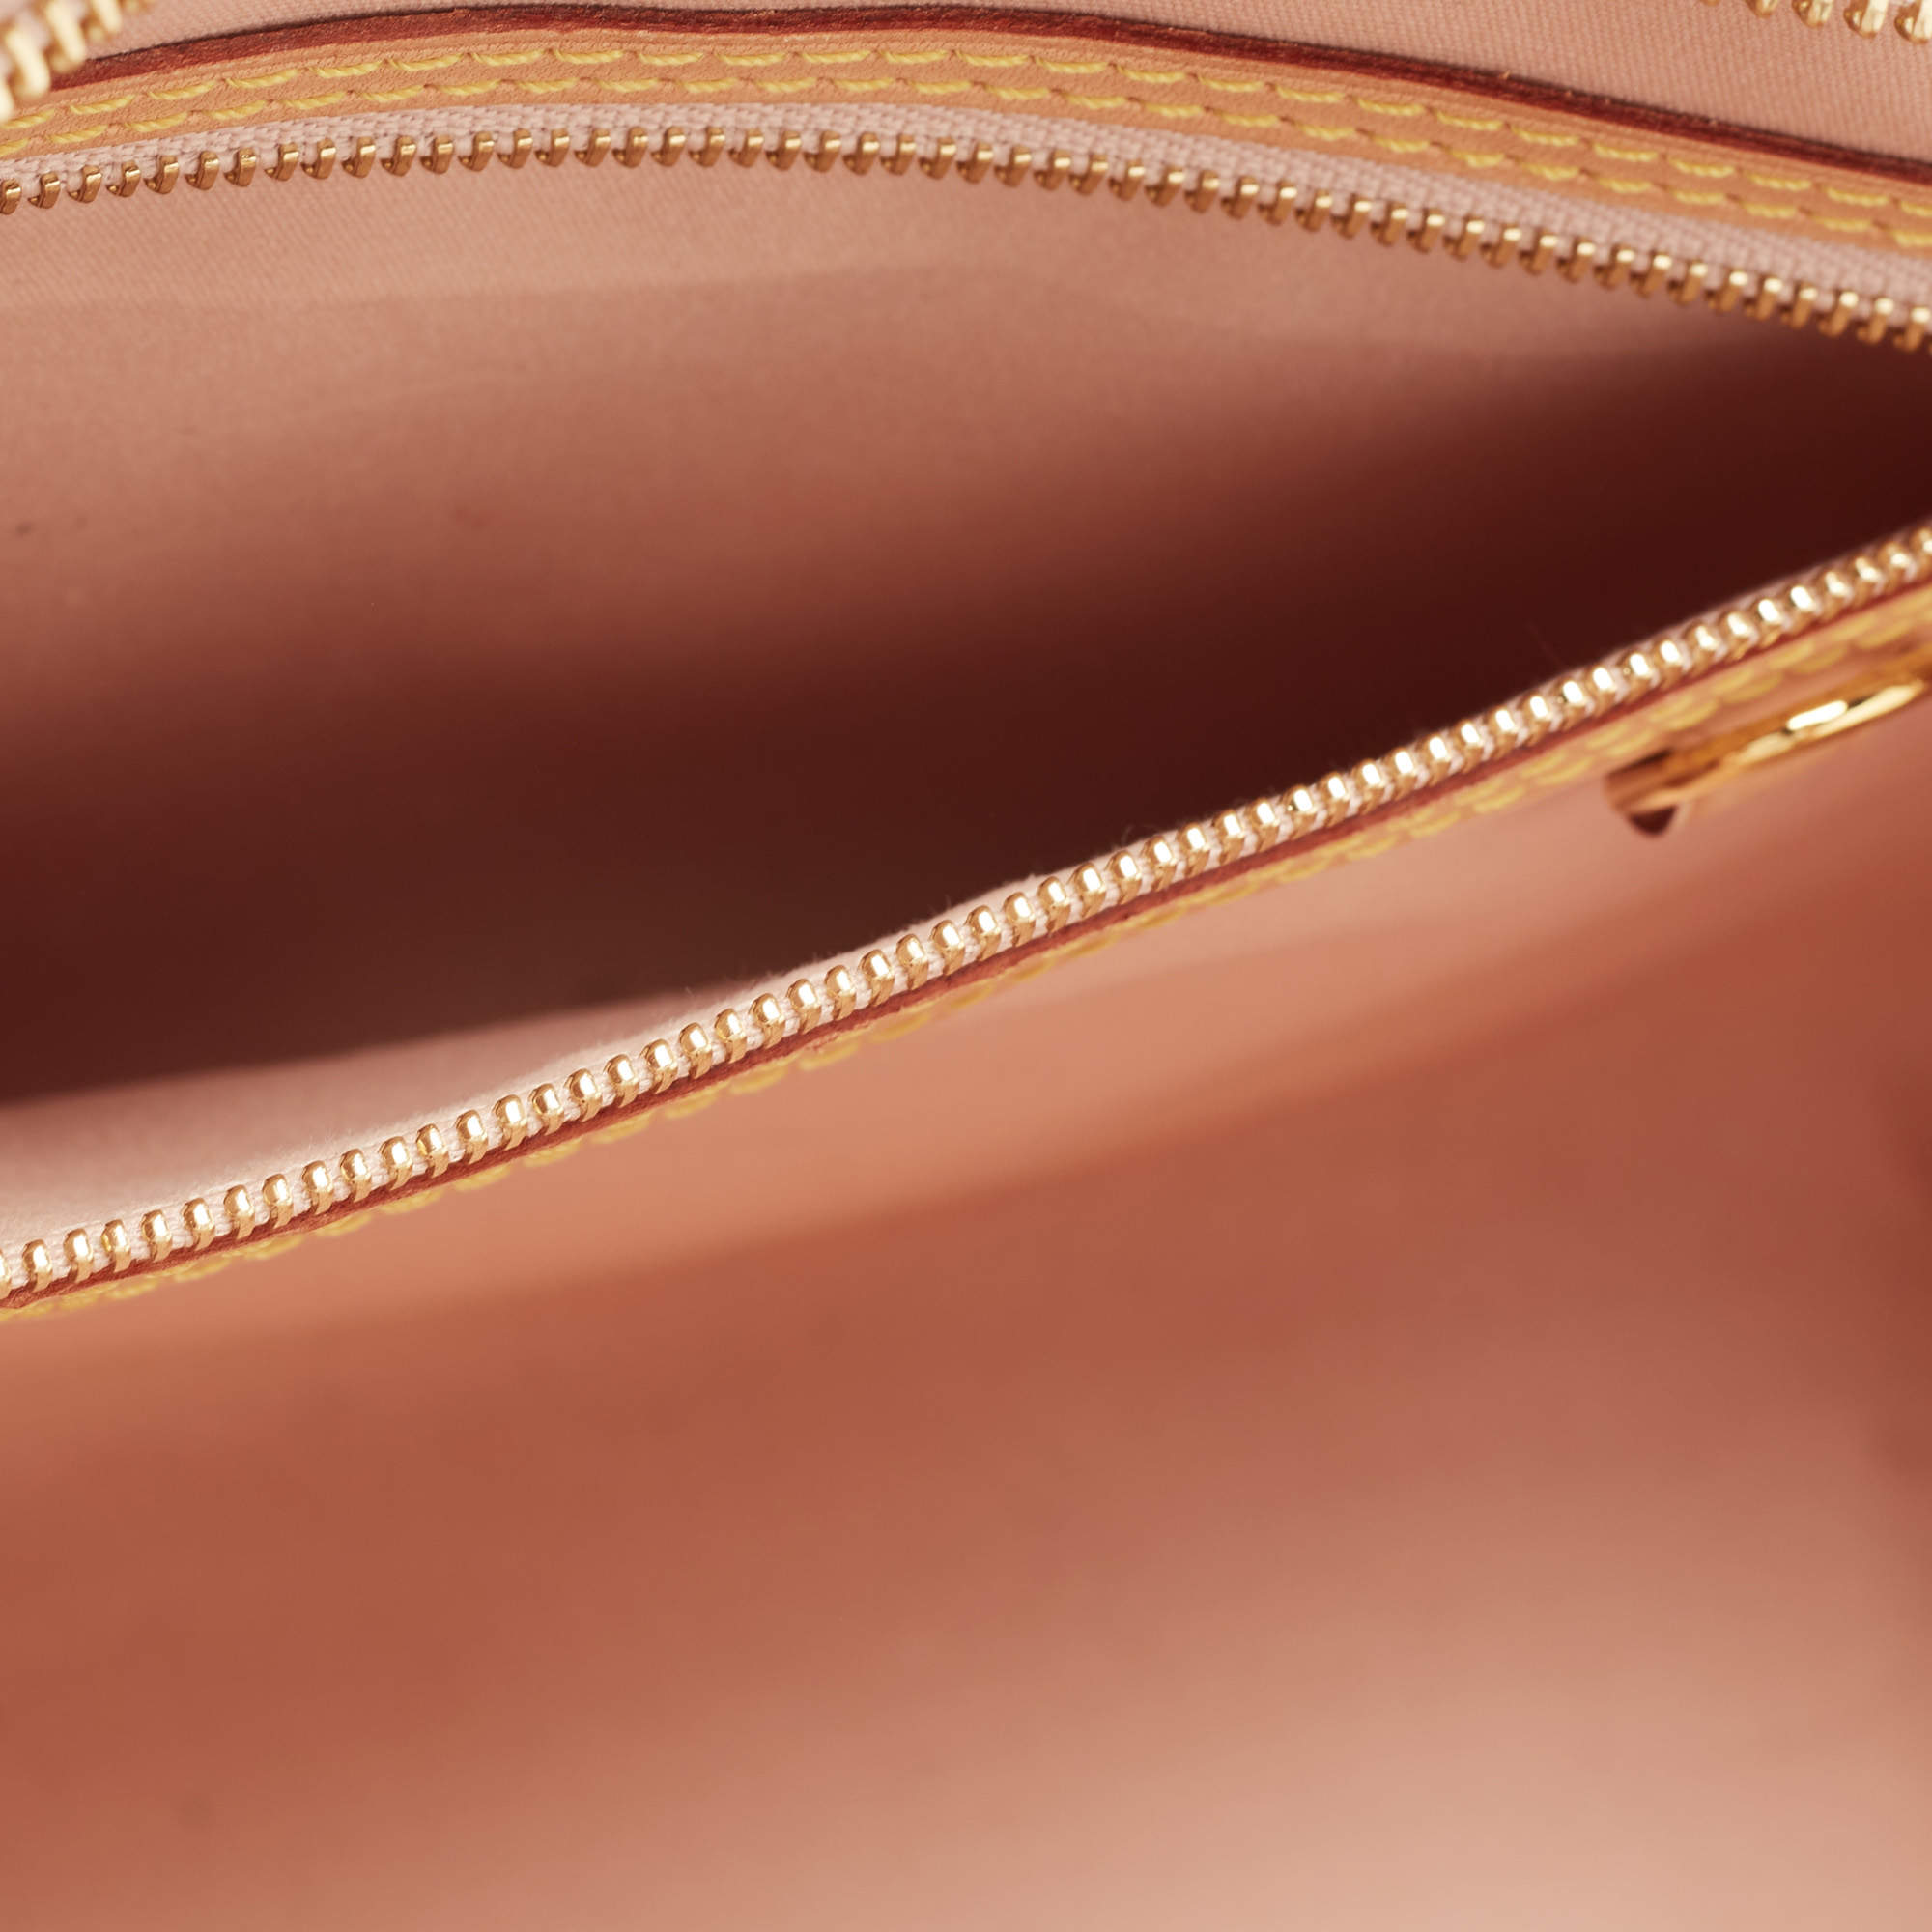 Louis Vuitton Rose Angelique Vernis mm Brea Bag Gold Hardware, 2013 (Very Good)